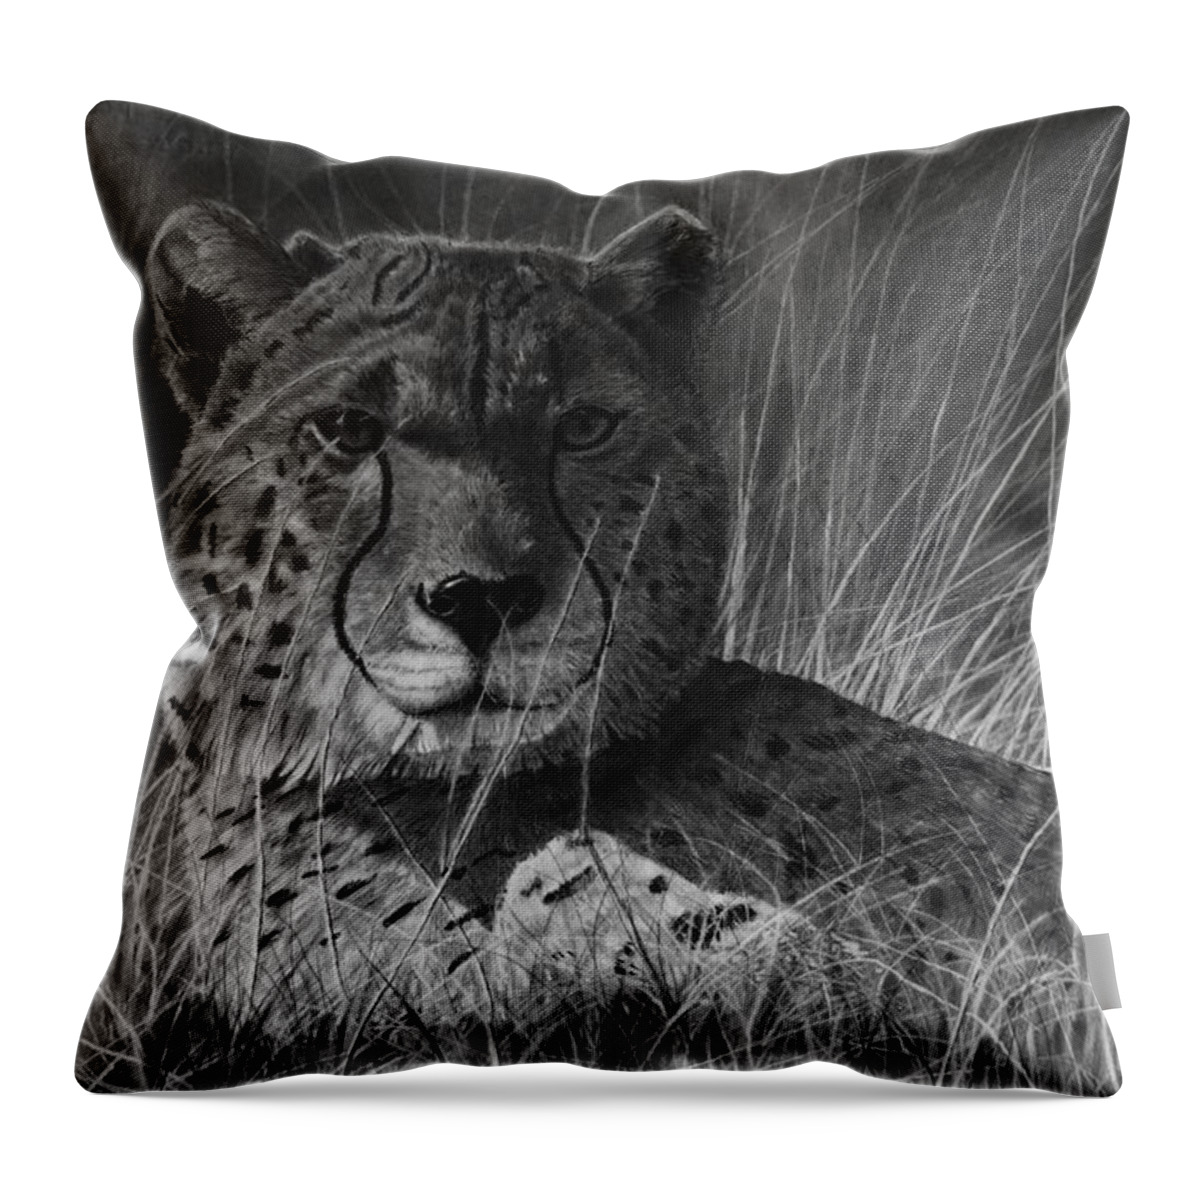 Cheetah Throw Pillow featuring the drawing Savannah by Greg Fox